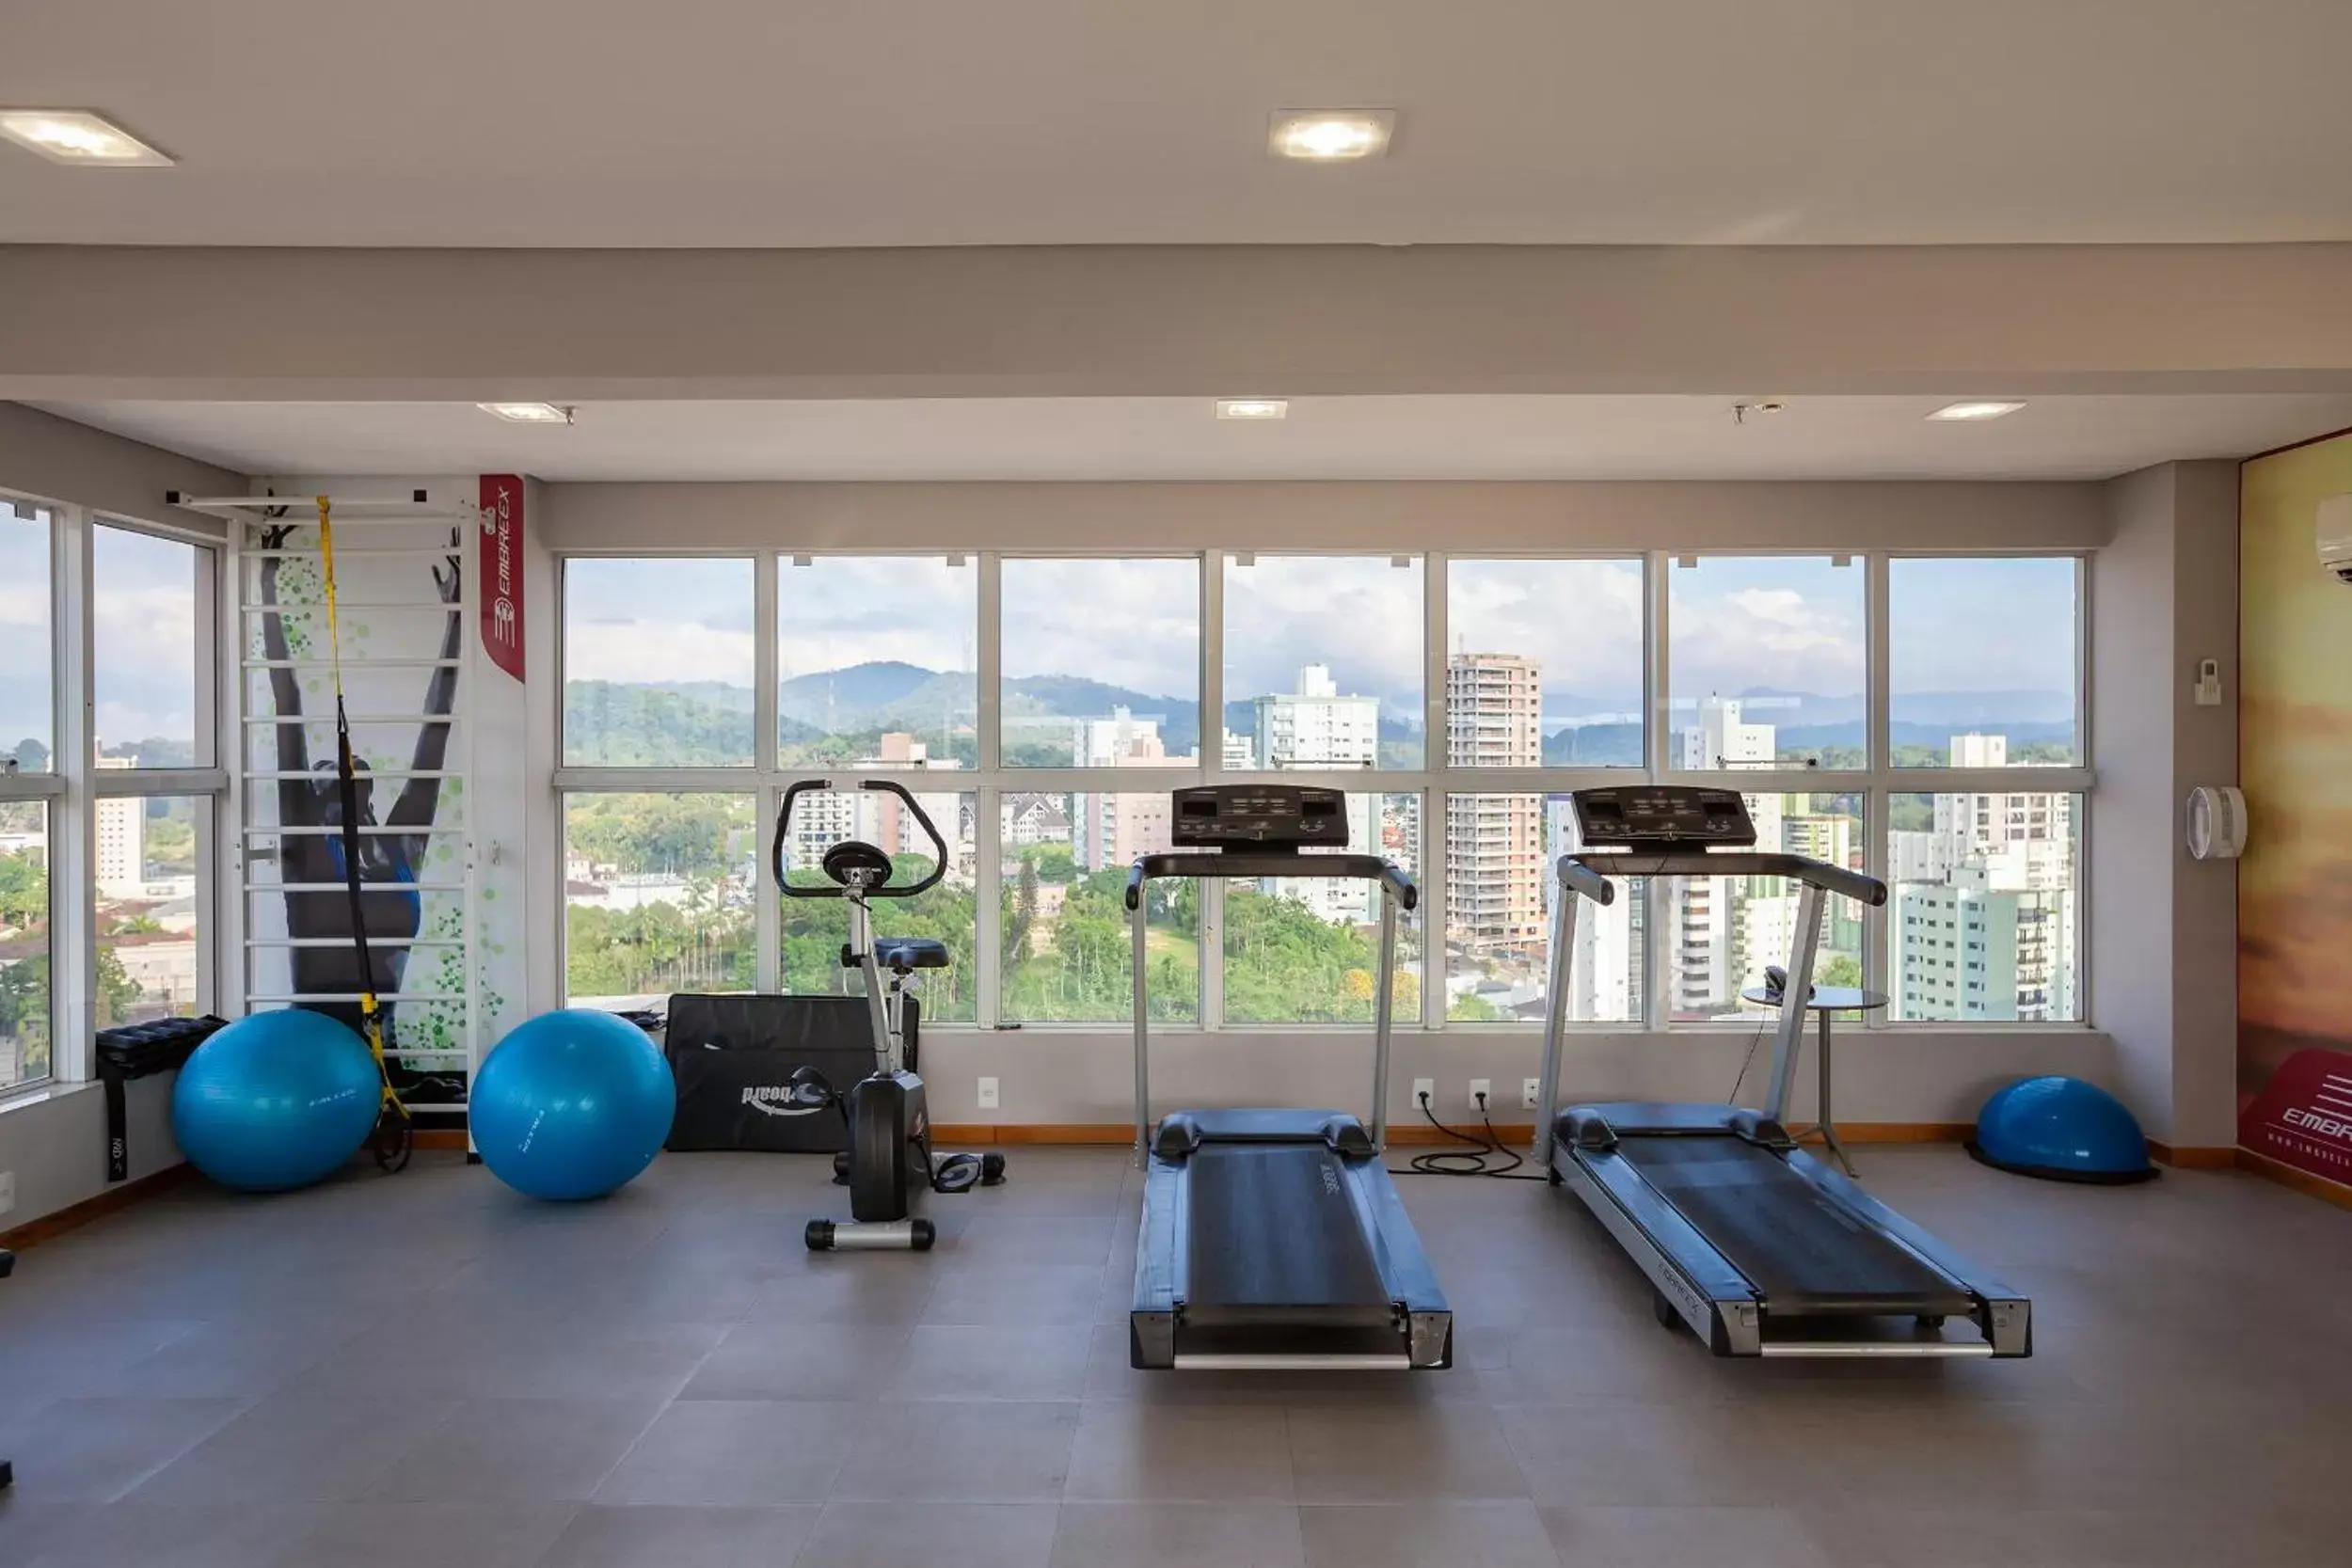 Fitness centre/facilities, Fitness Center/Facilities in Tri Hotel Executive Brusque